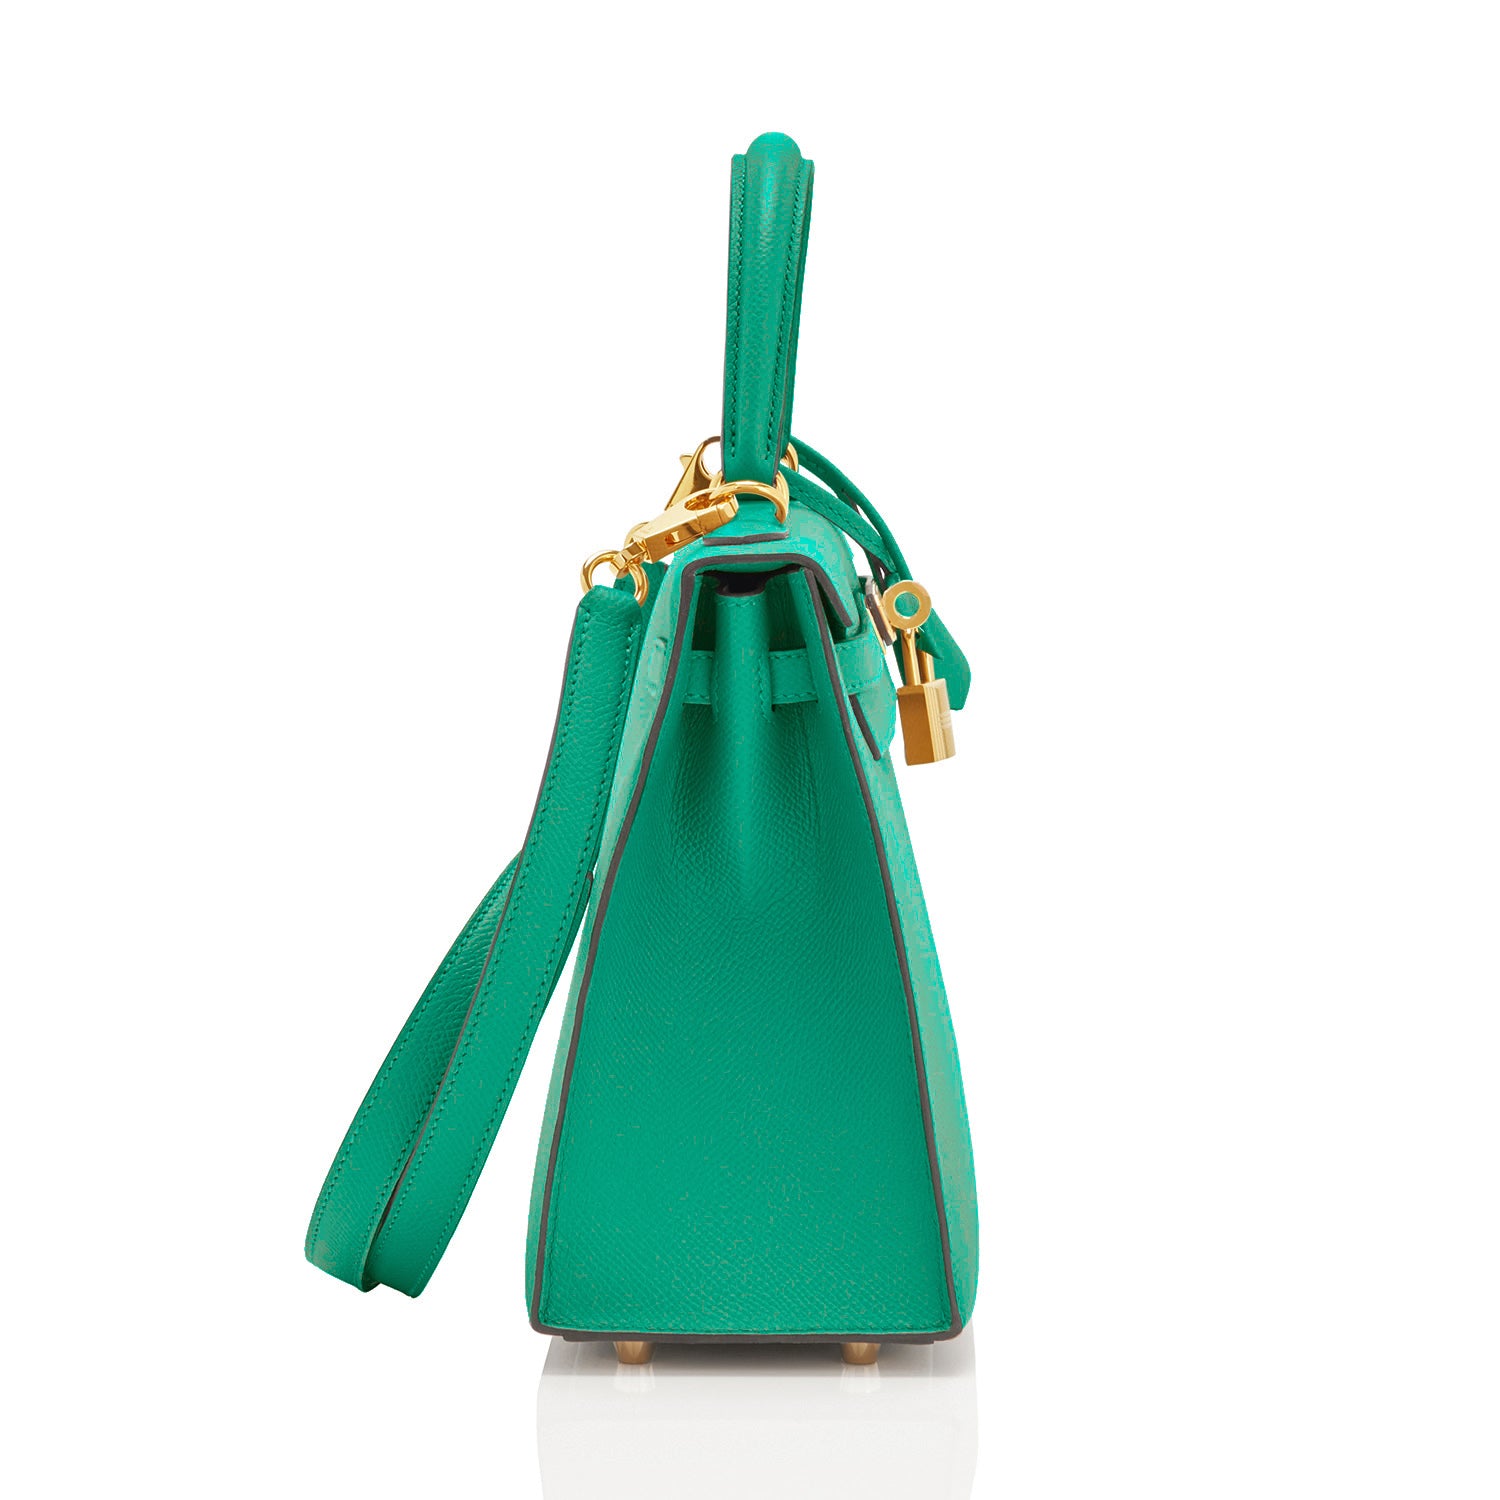 20cm MINI Kelly, Vert Vertigo color, EPSOM leather#mini kelly#kelly  bag#women bag#fashion handbag#designer bag